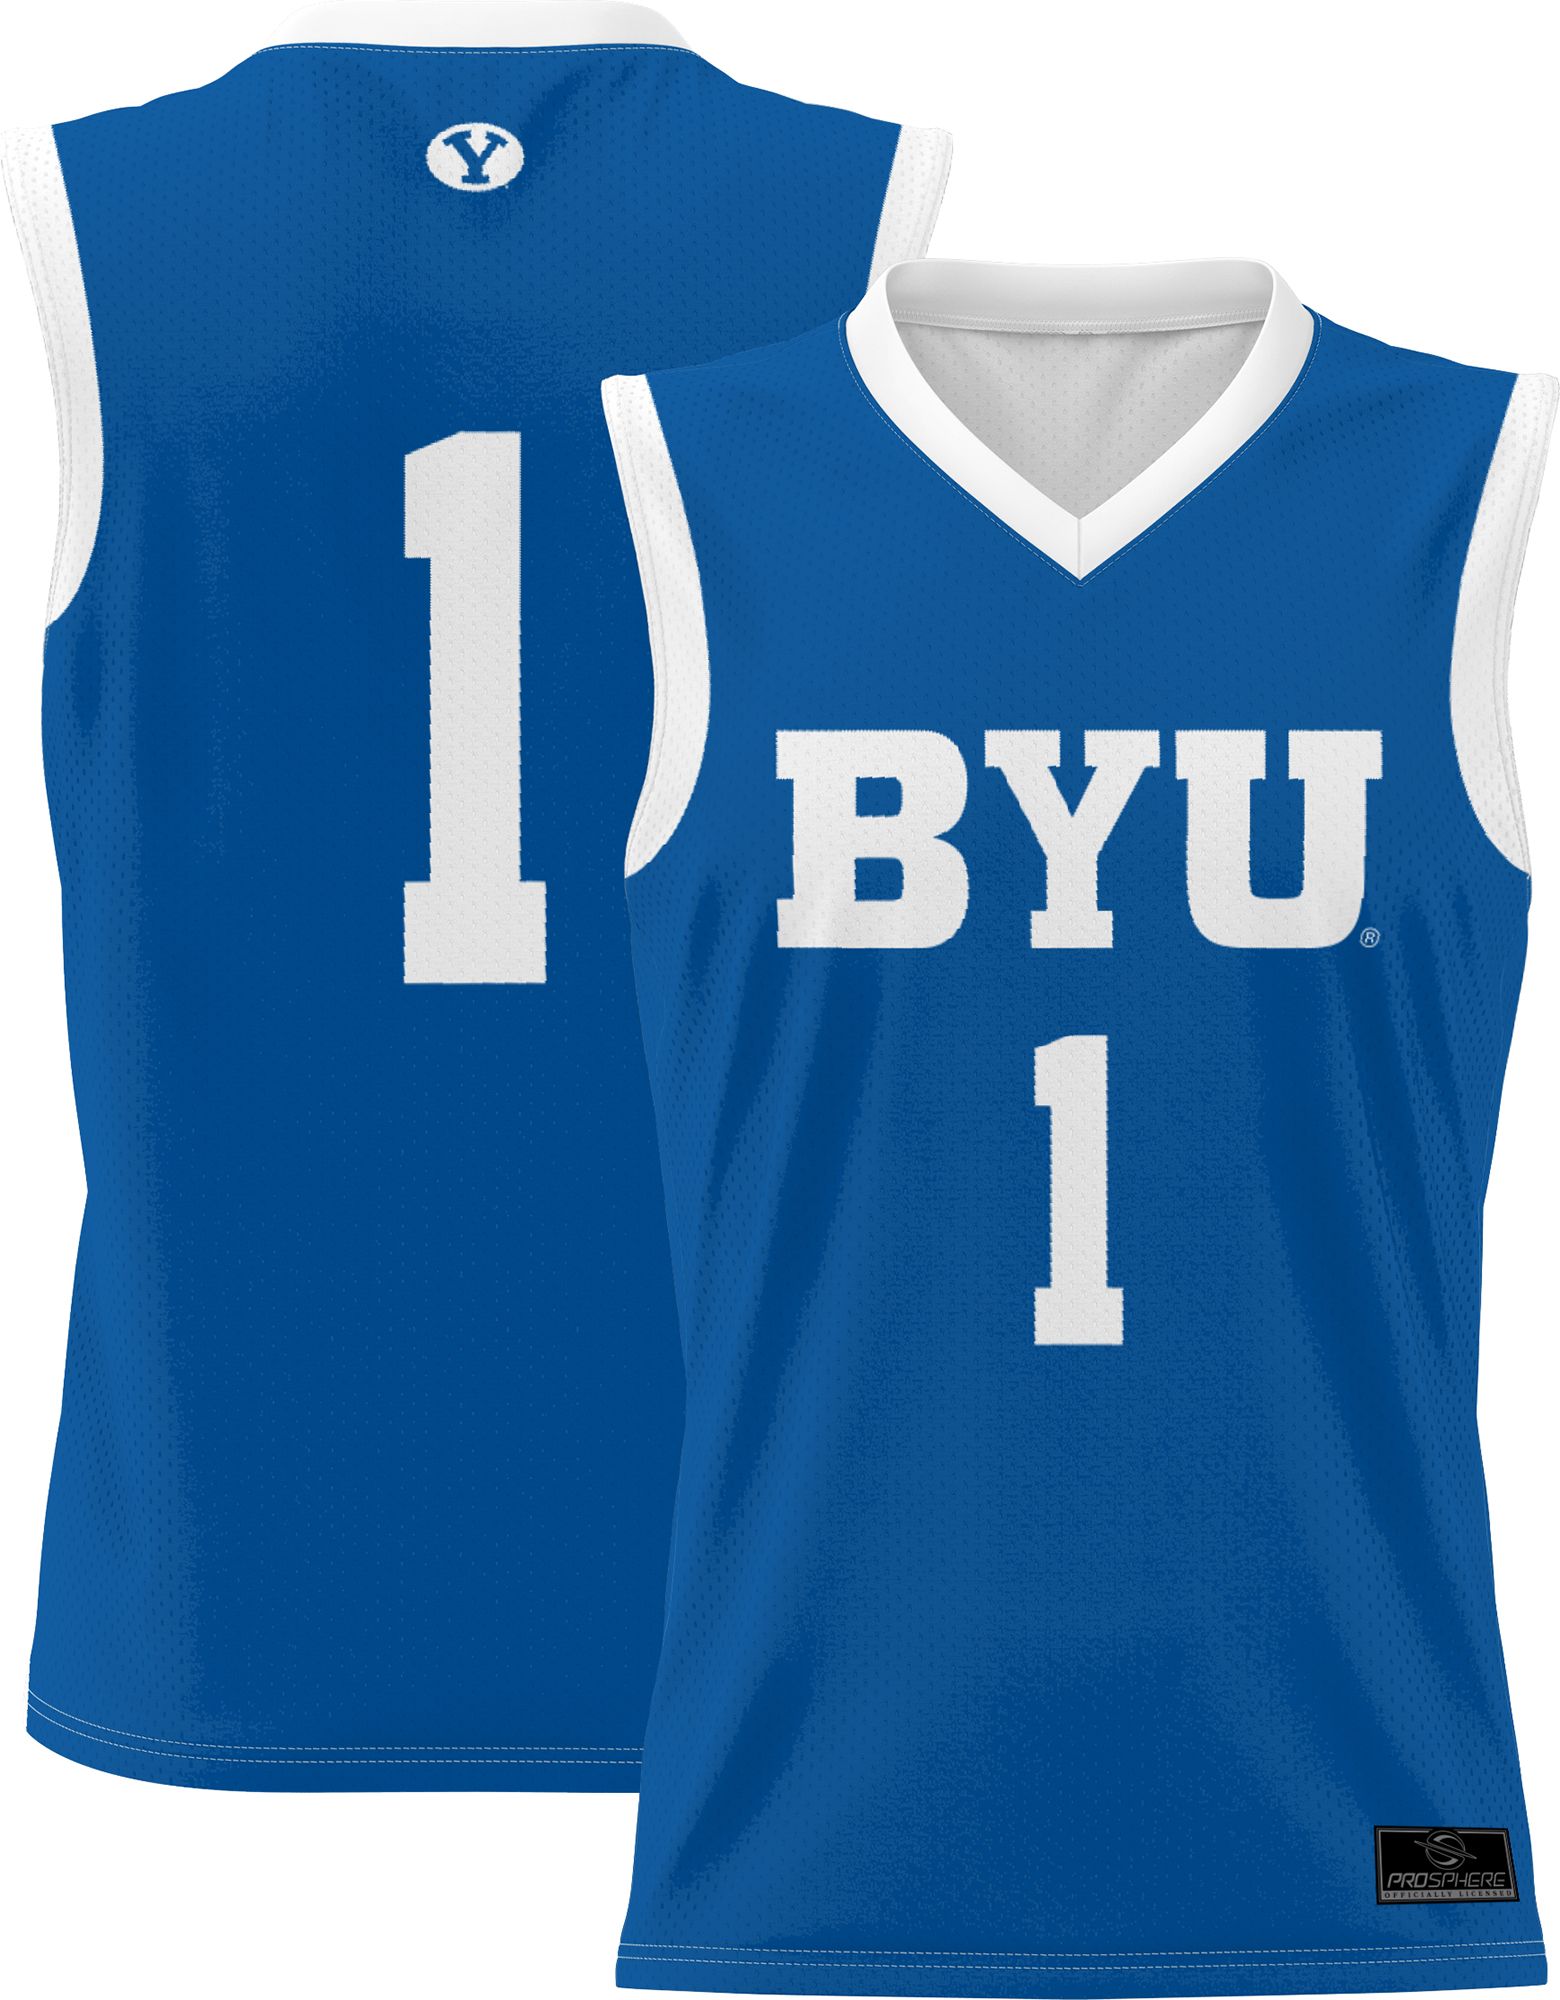 BYU Cougars basketball NCAA champions jersey